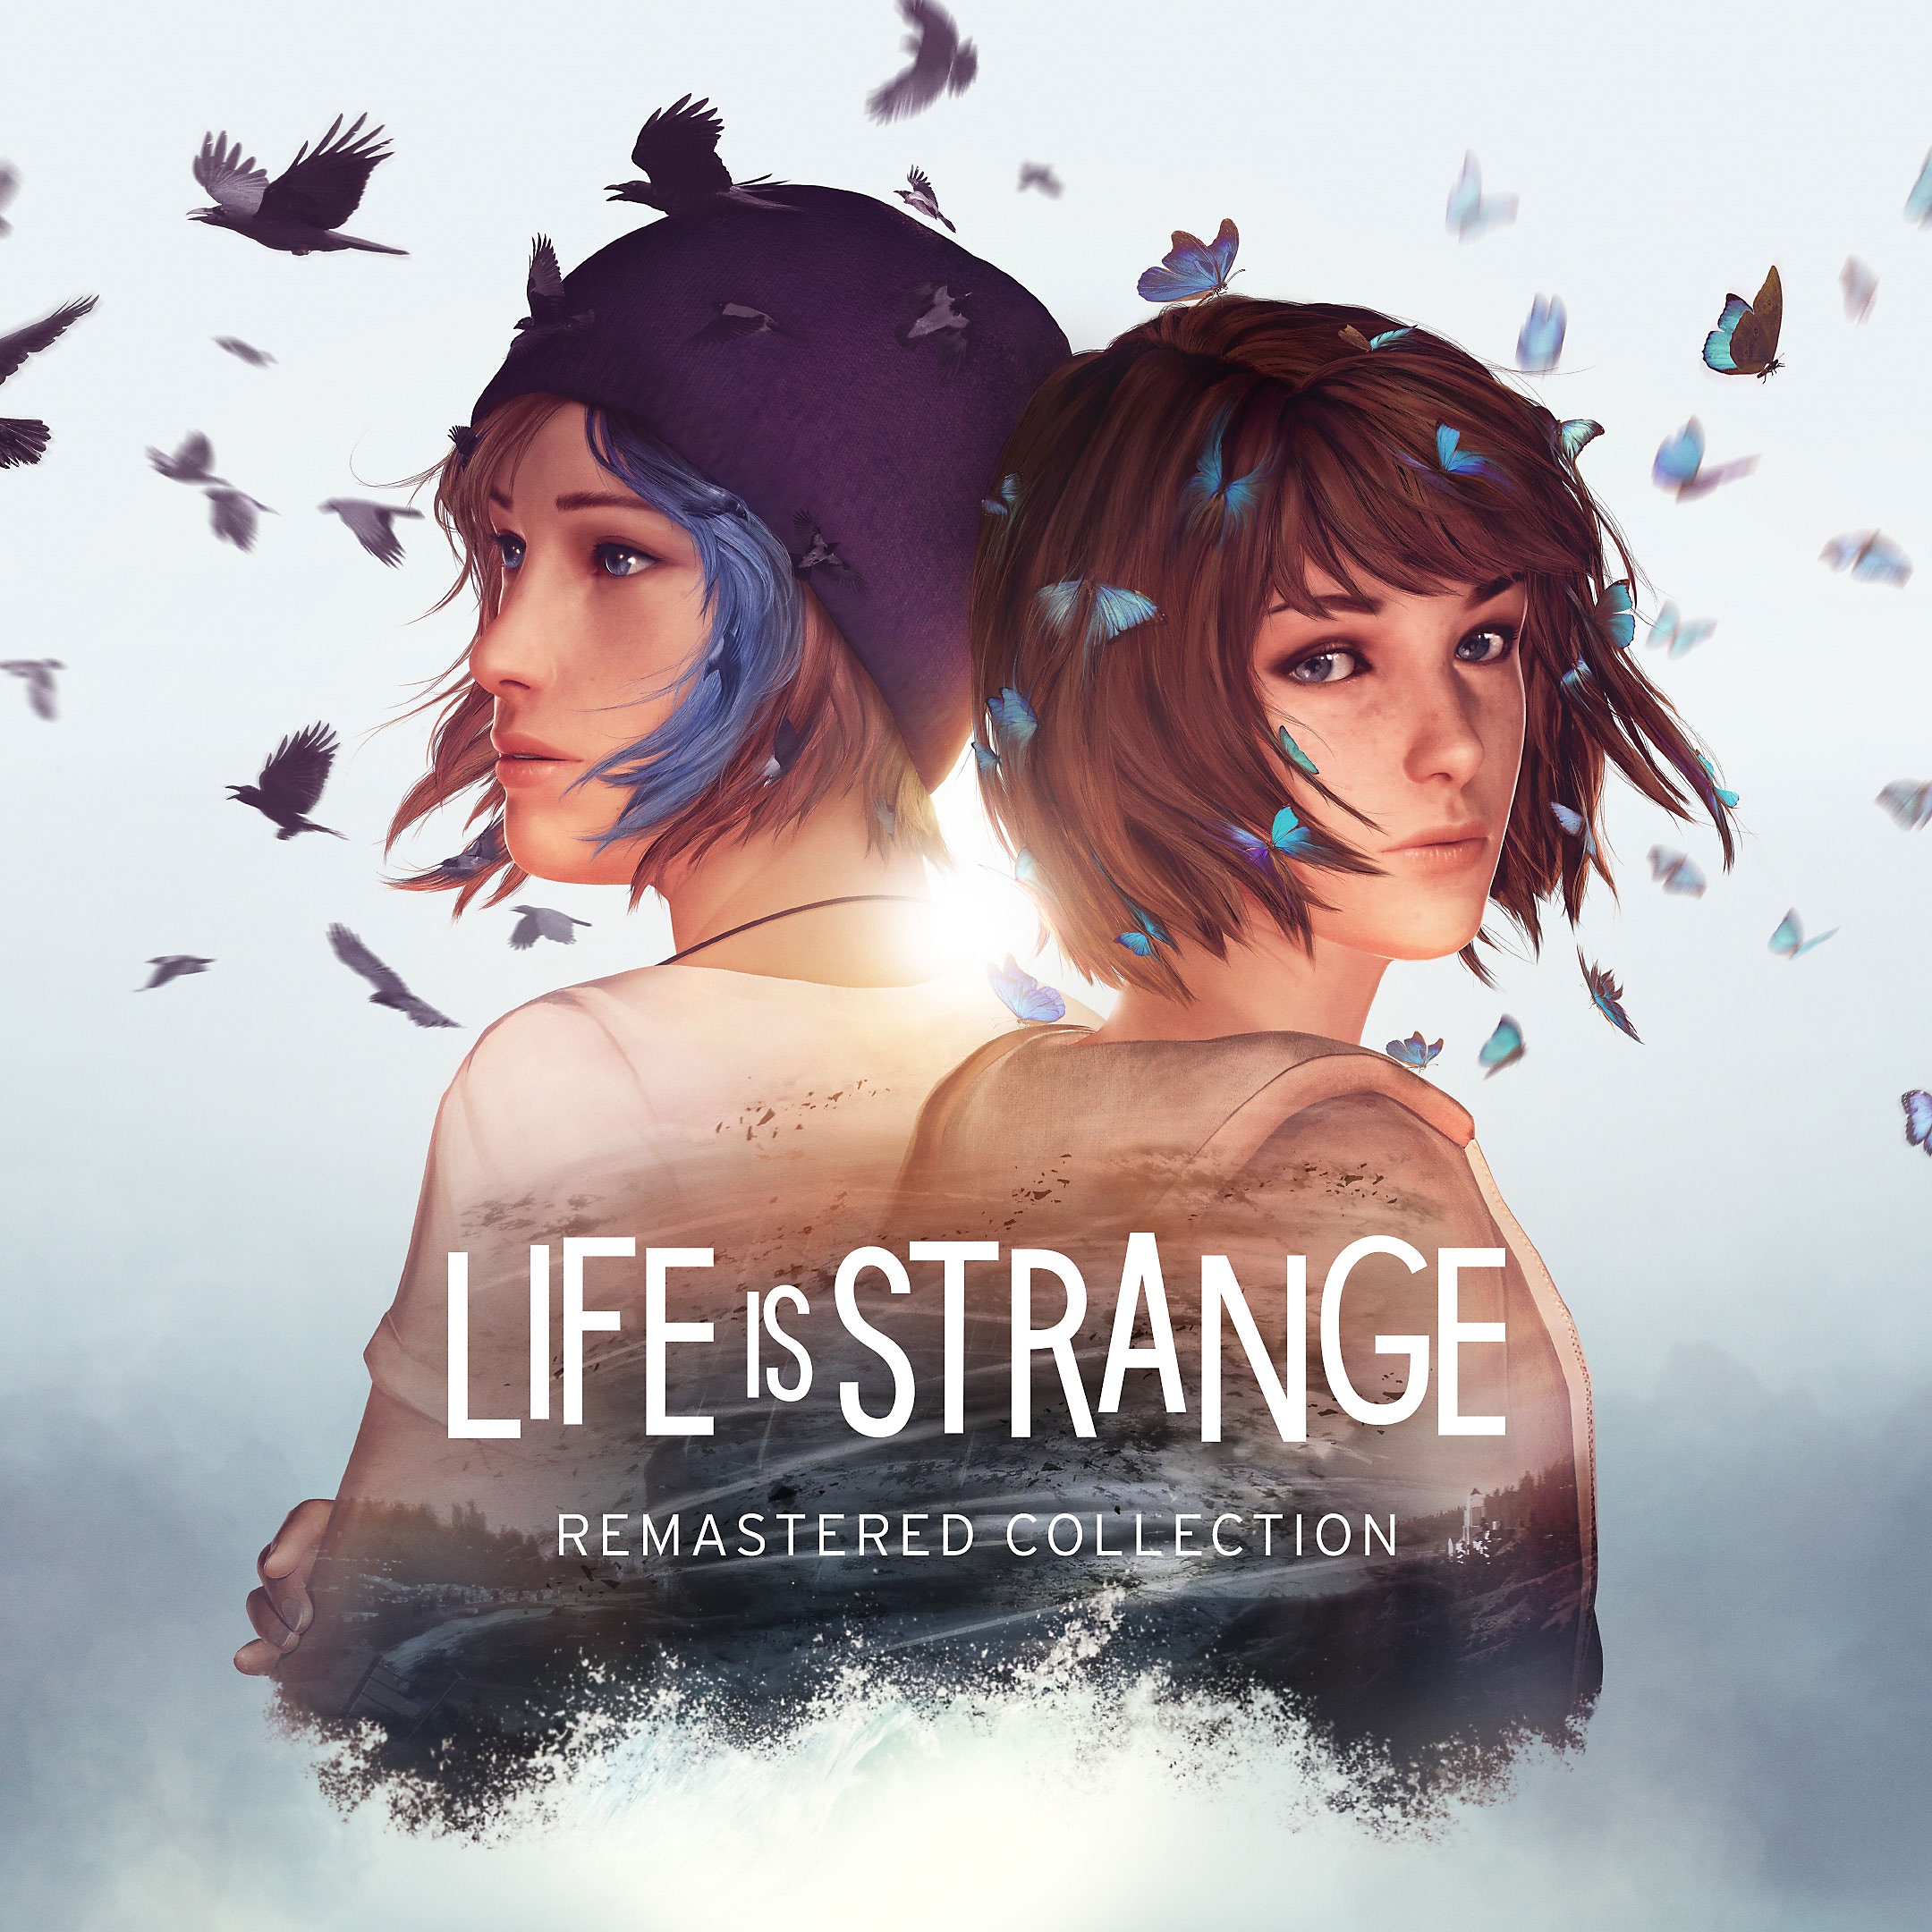 Life is Strange Remastered Collection – grafika z obchodu